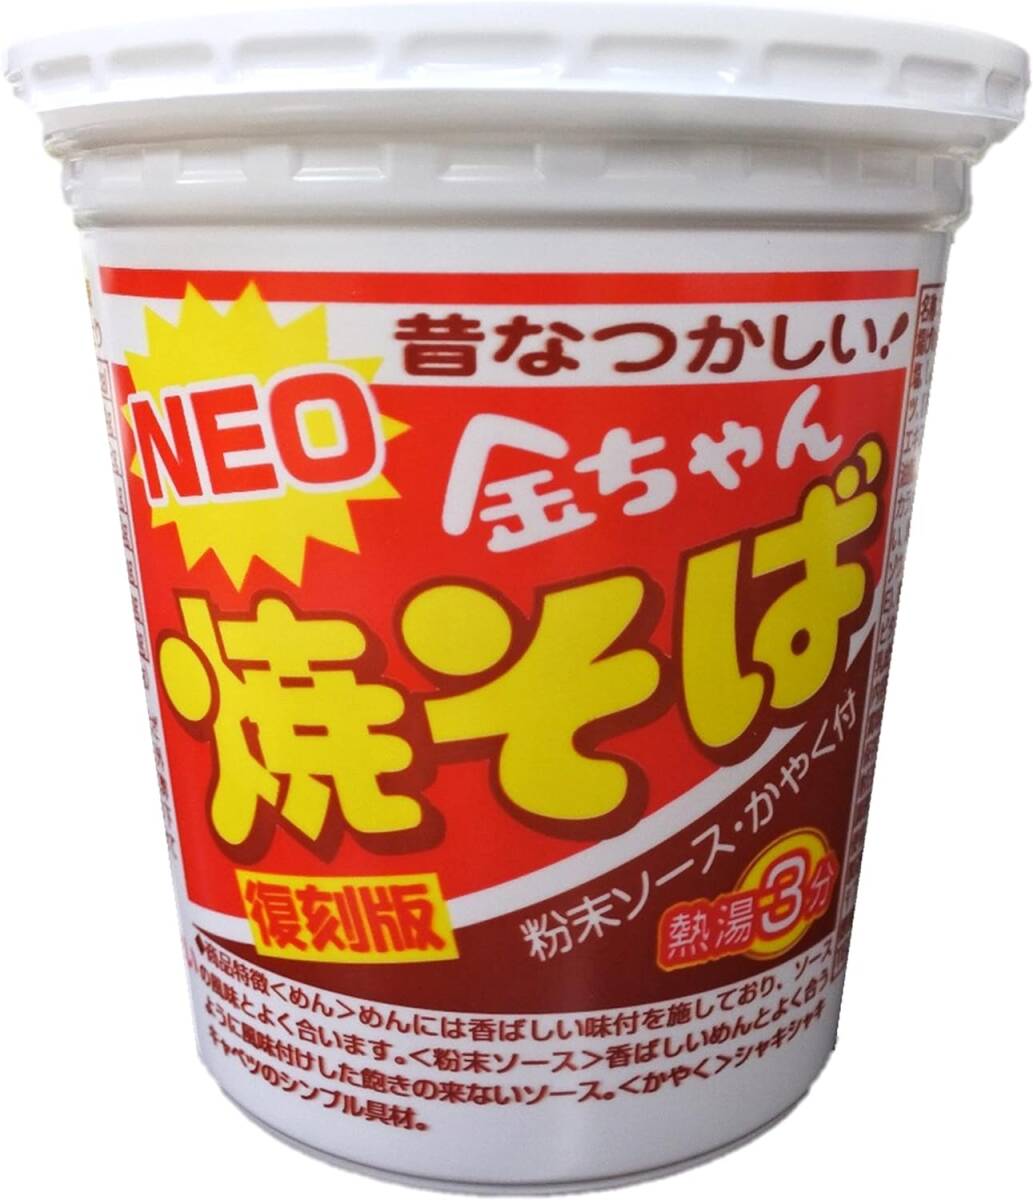  Tokushima made flour NEO gold Chan . soba reprint 84g×12 piece 